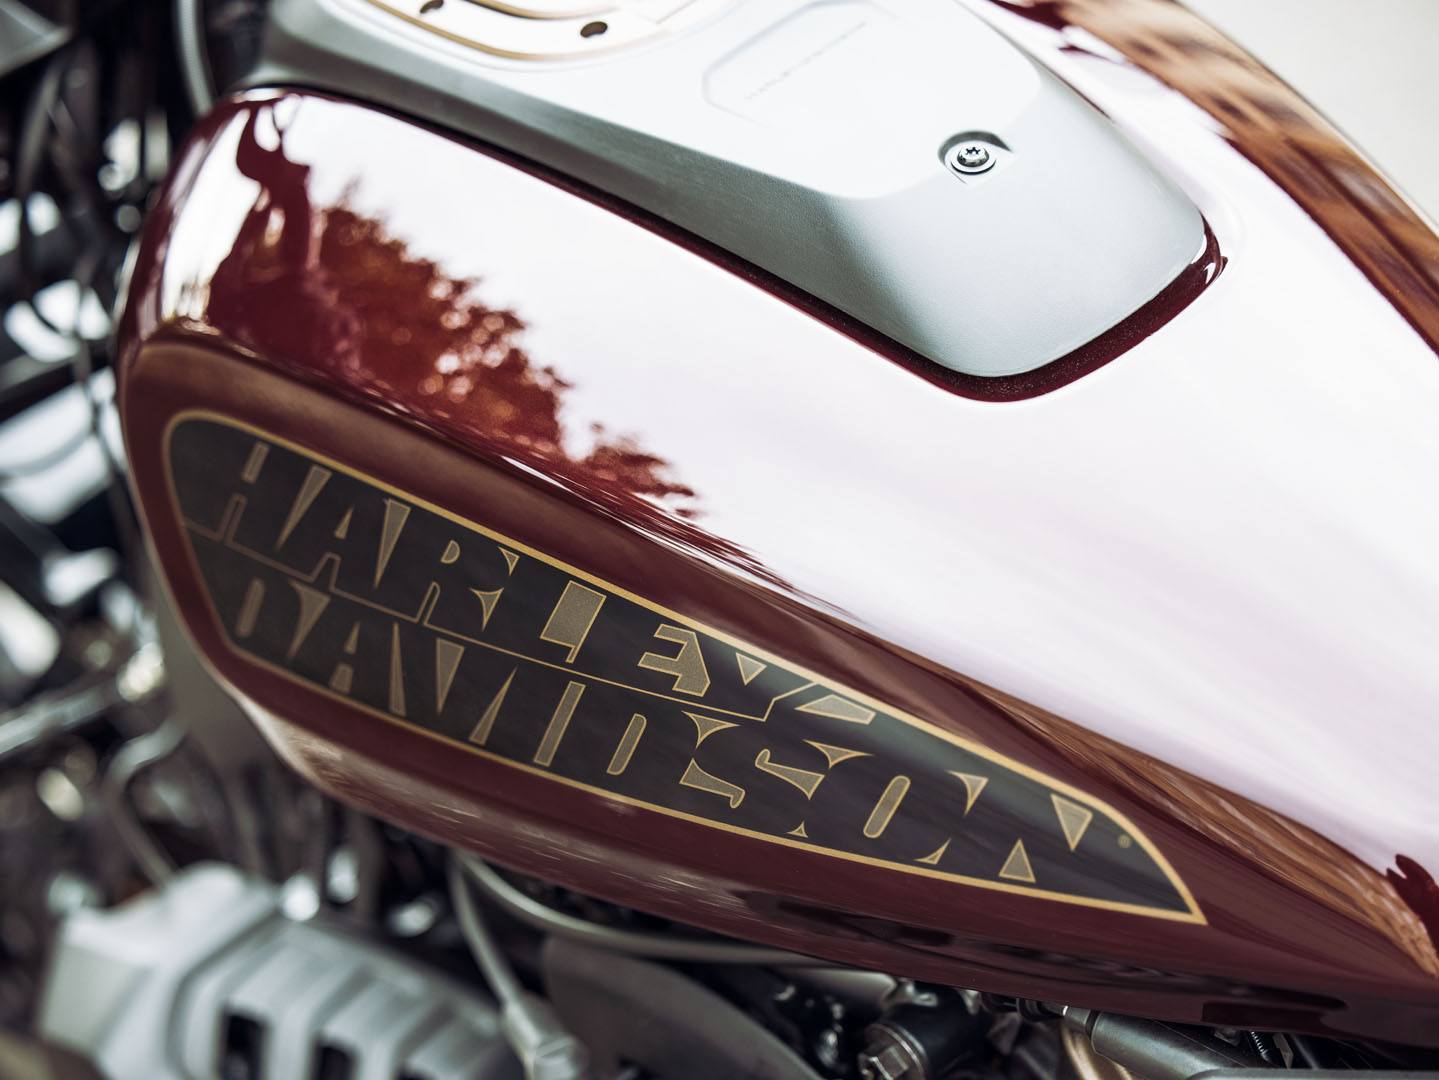 2021 Harley-Davidson Sportster® S in South Charleston, West Virginia - Photo 4